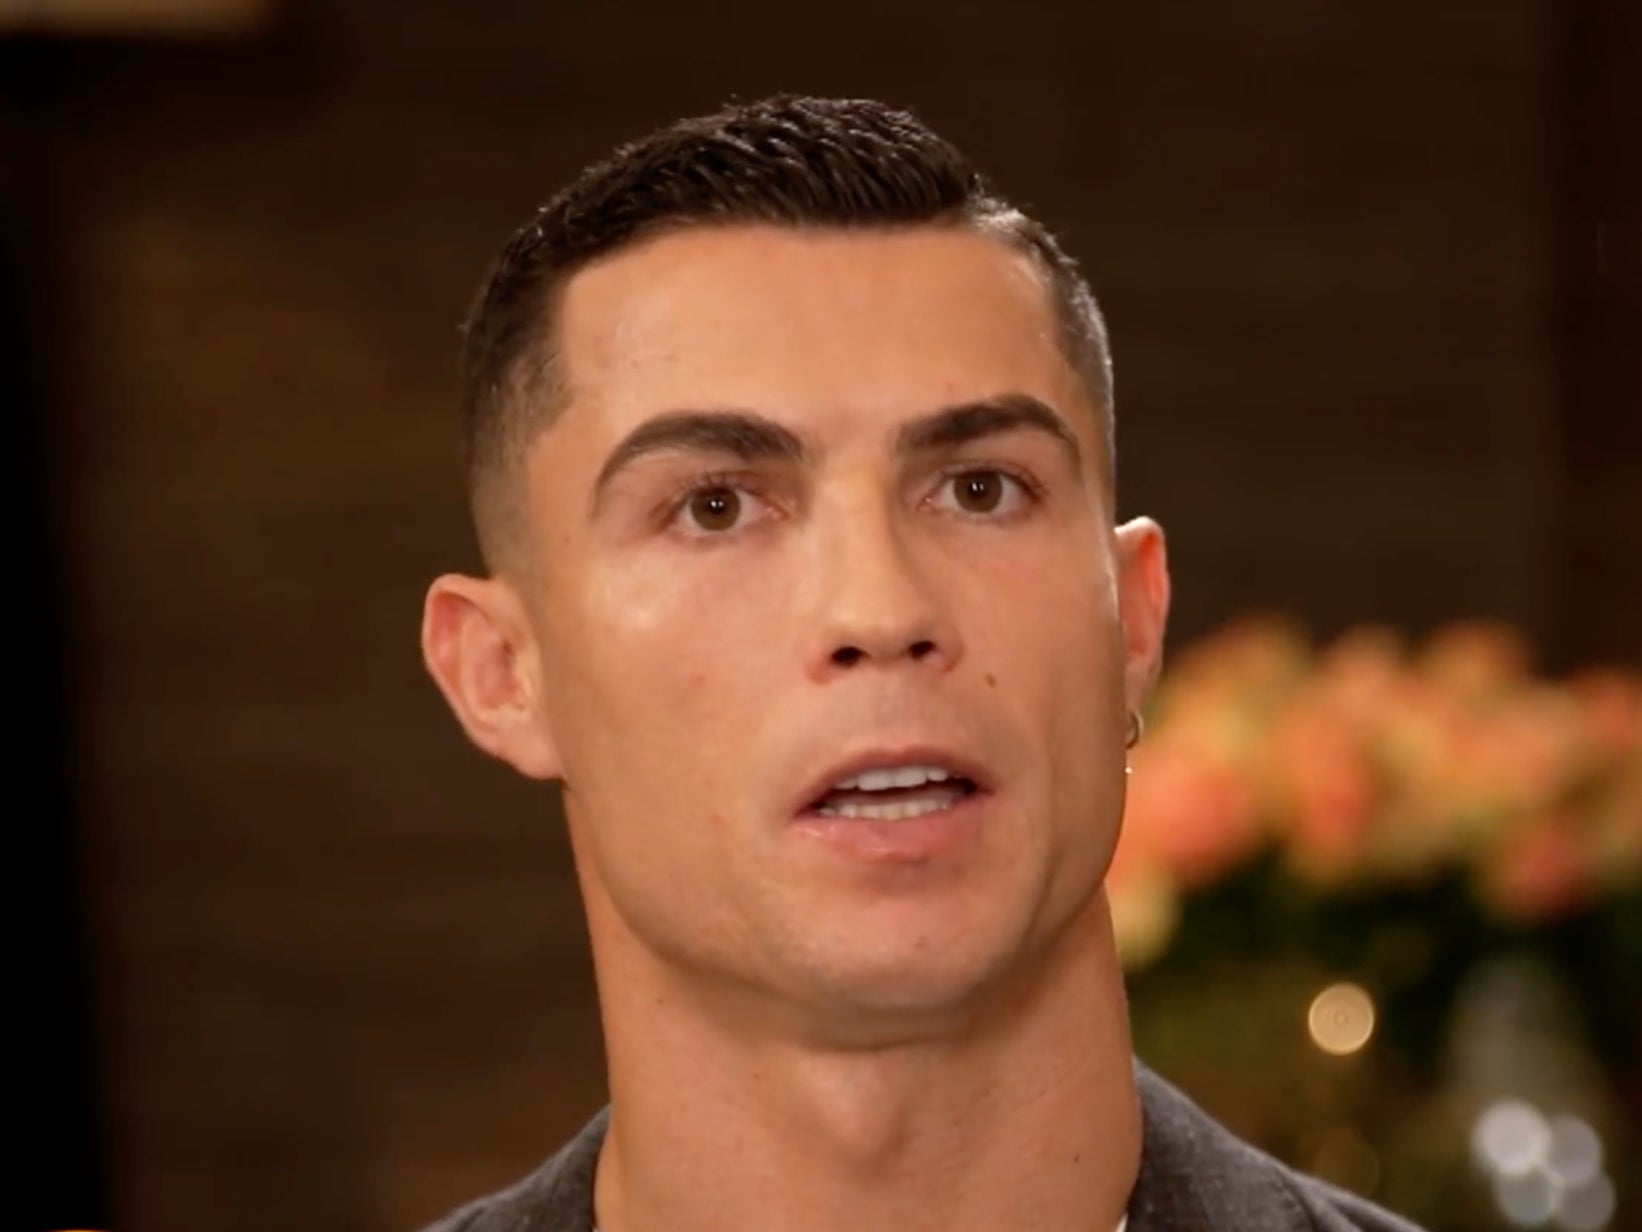 Ronaldo’s interview sparked headlines